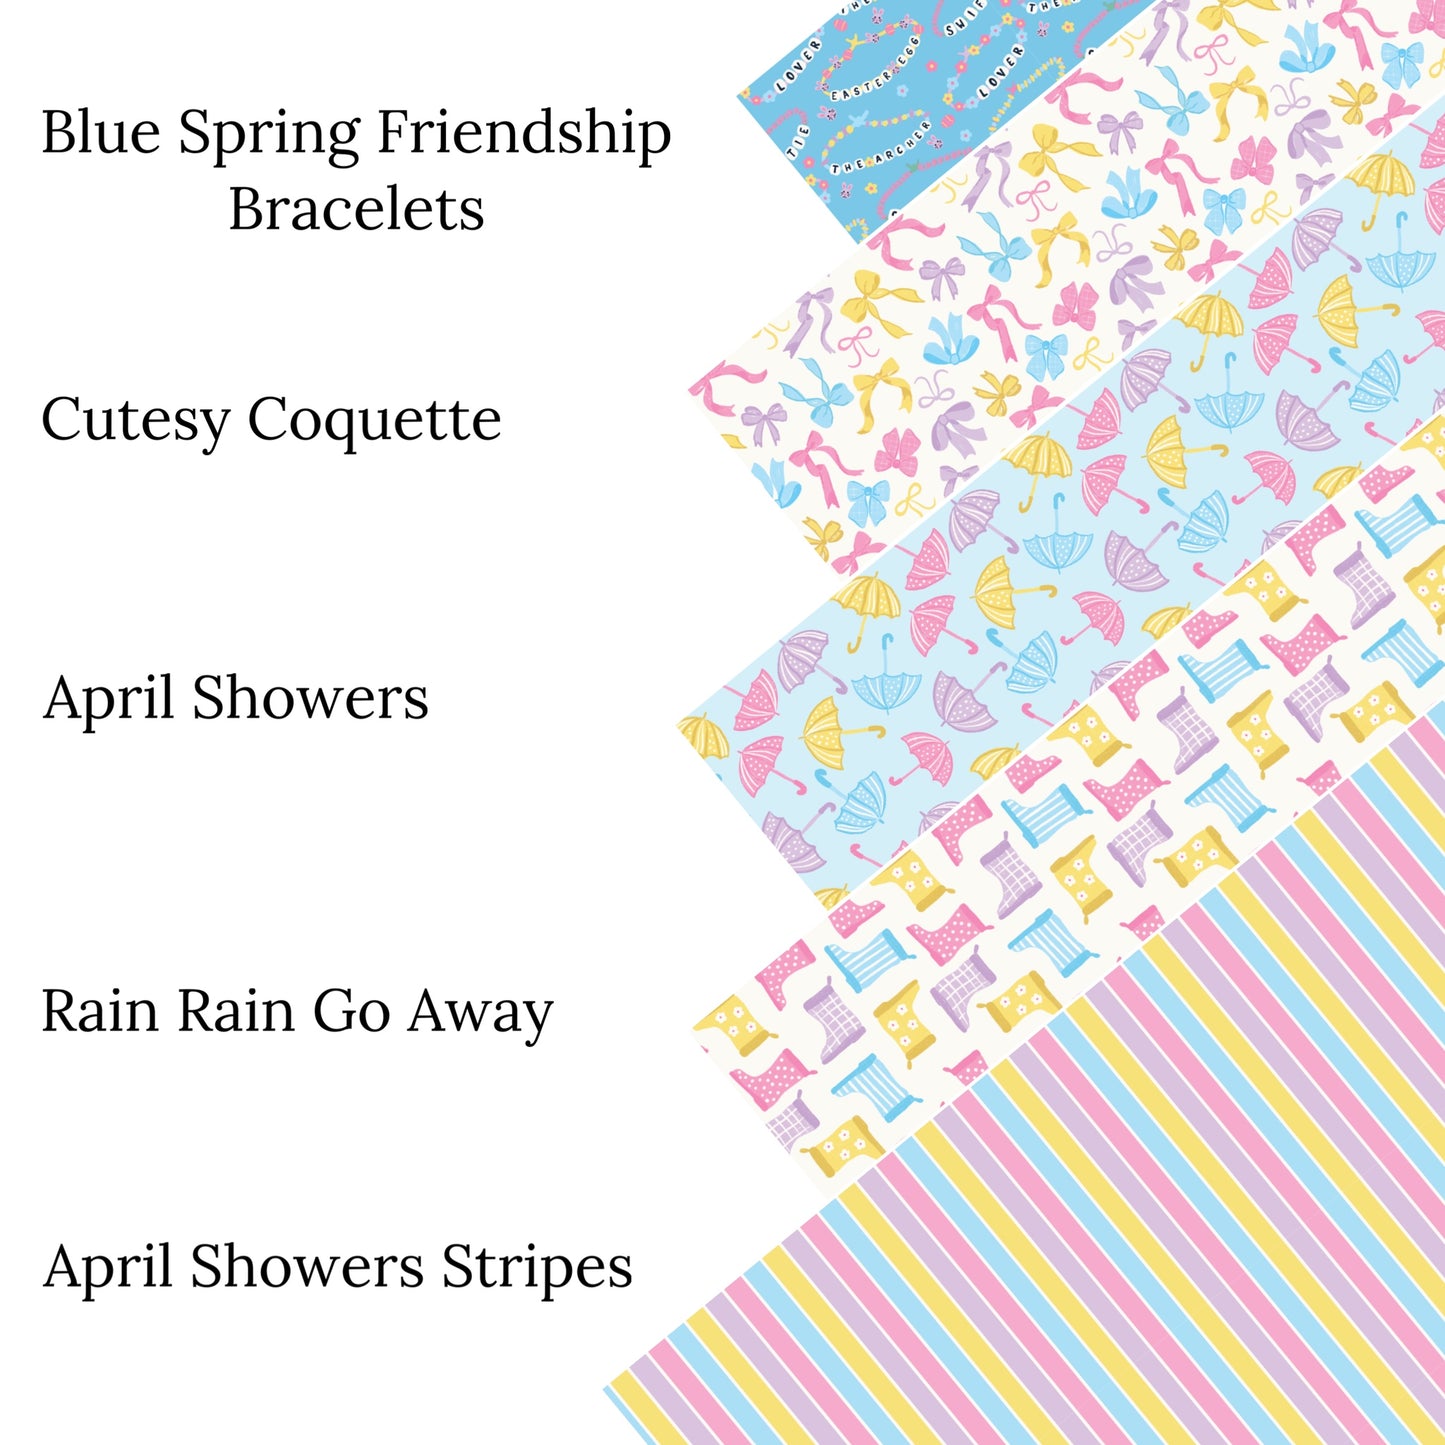 April Showers Faux Leather Sheets